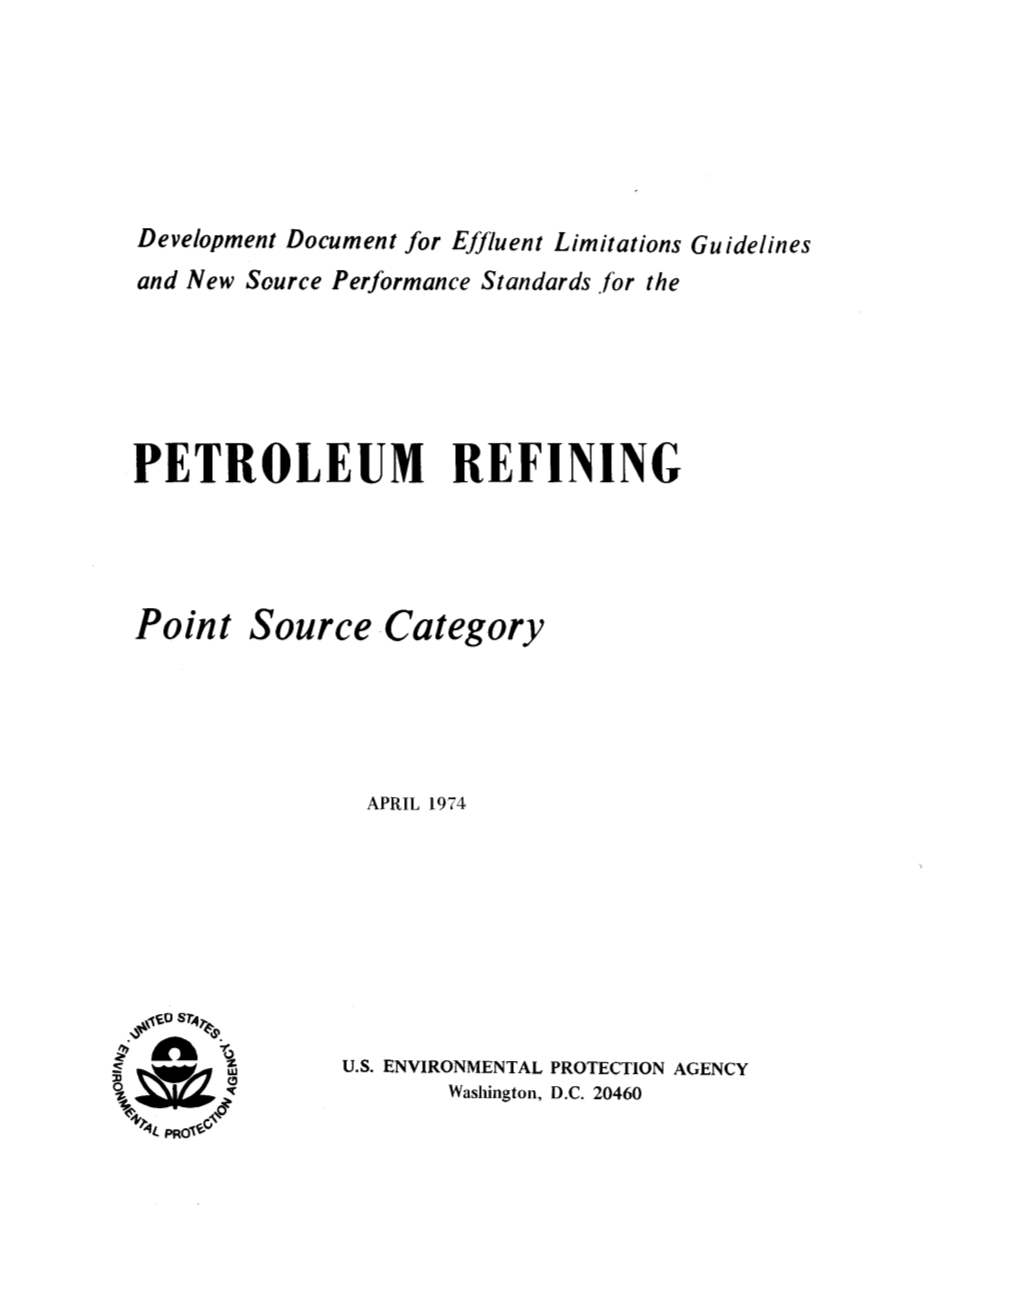 Development Document for the Petroleum Refining Category